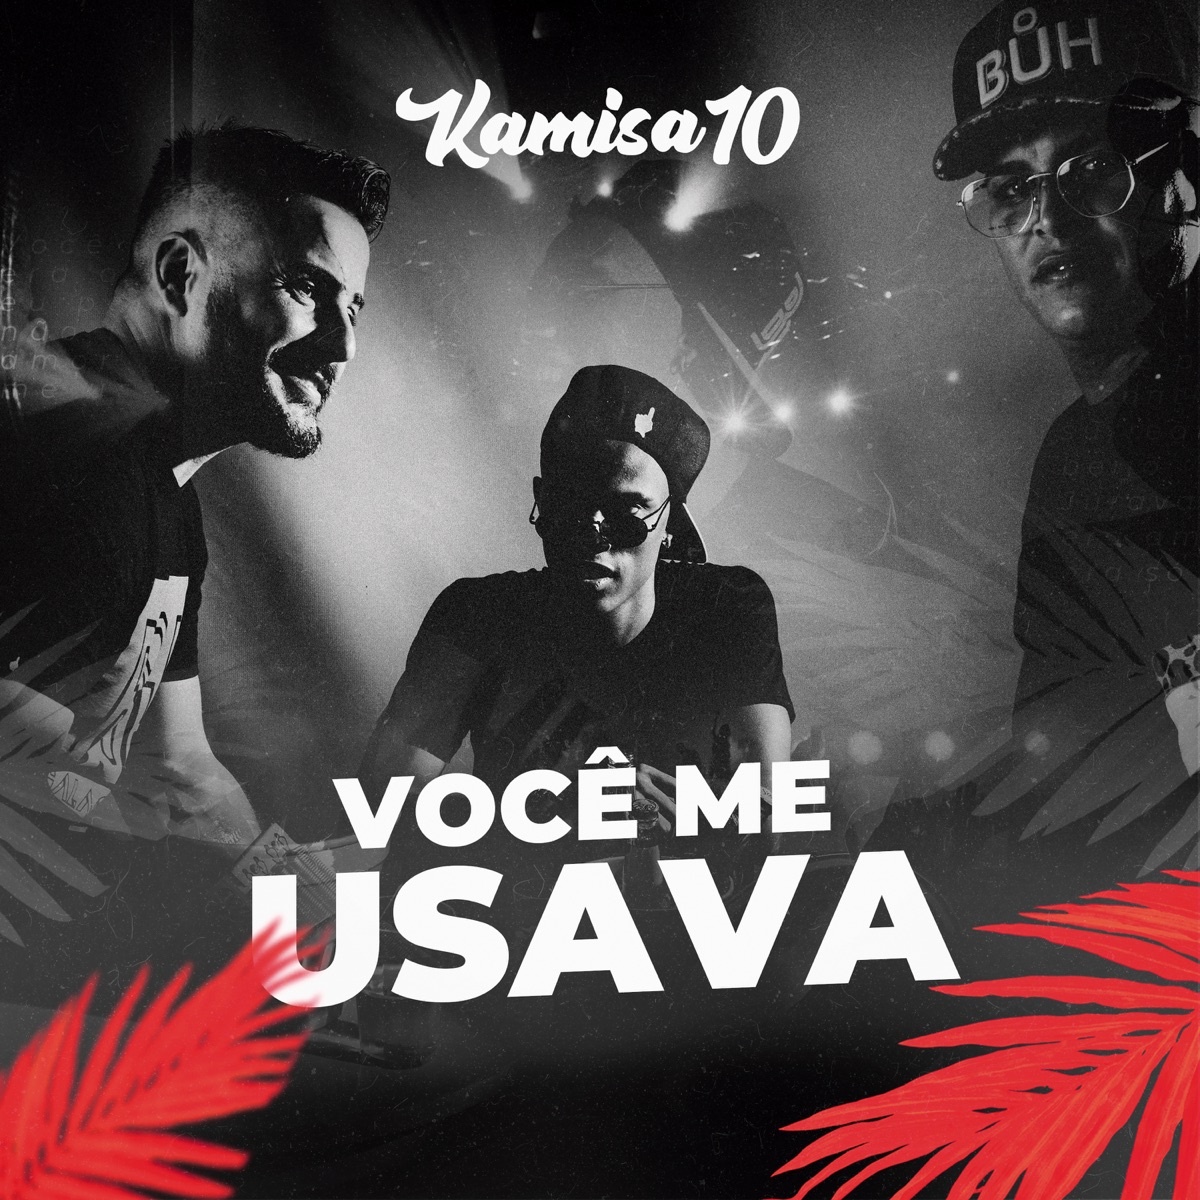 Kamisa 10 apresenta EP3 do álbum “Na Vibe do K10” – Portal SUCESSO!